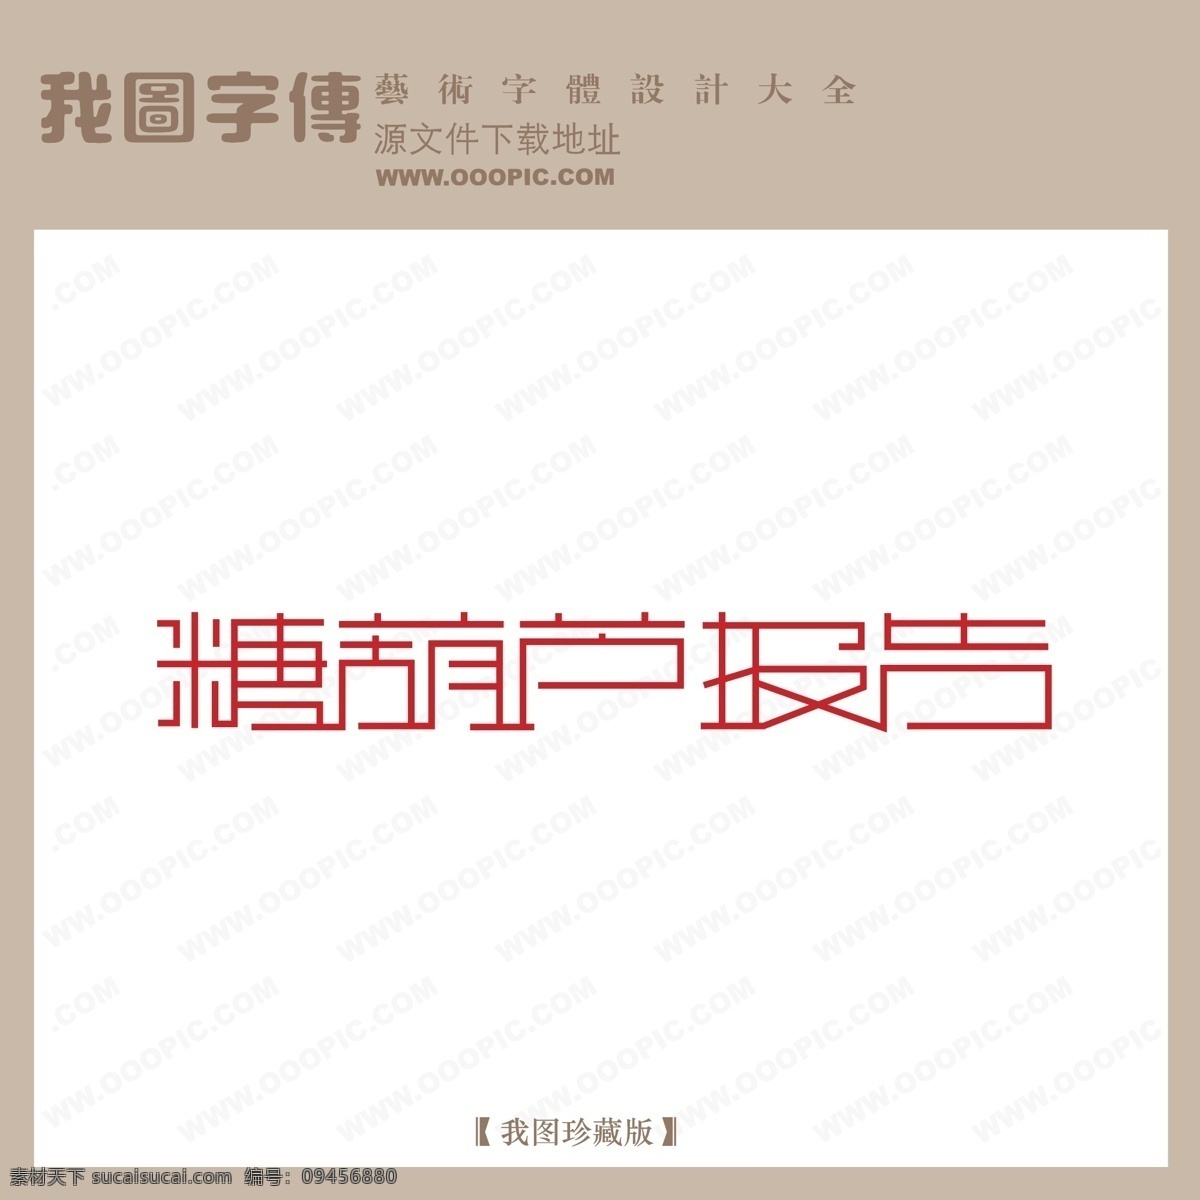 logo 艺术 字 创意艺术字 艺术字 艺术字设计 中文 现代艺术 字体设计 字体 设计艺术 糖葫芦报告 矢量图